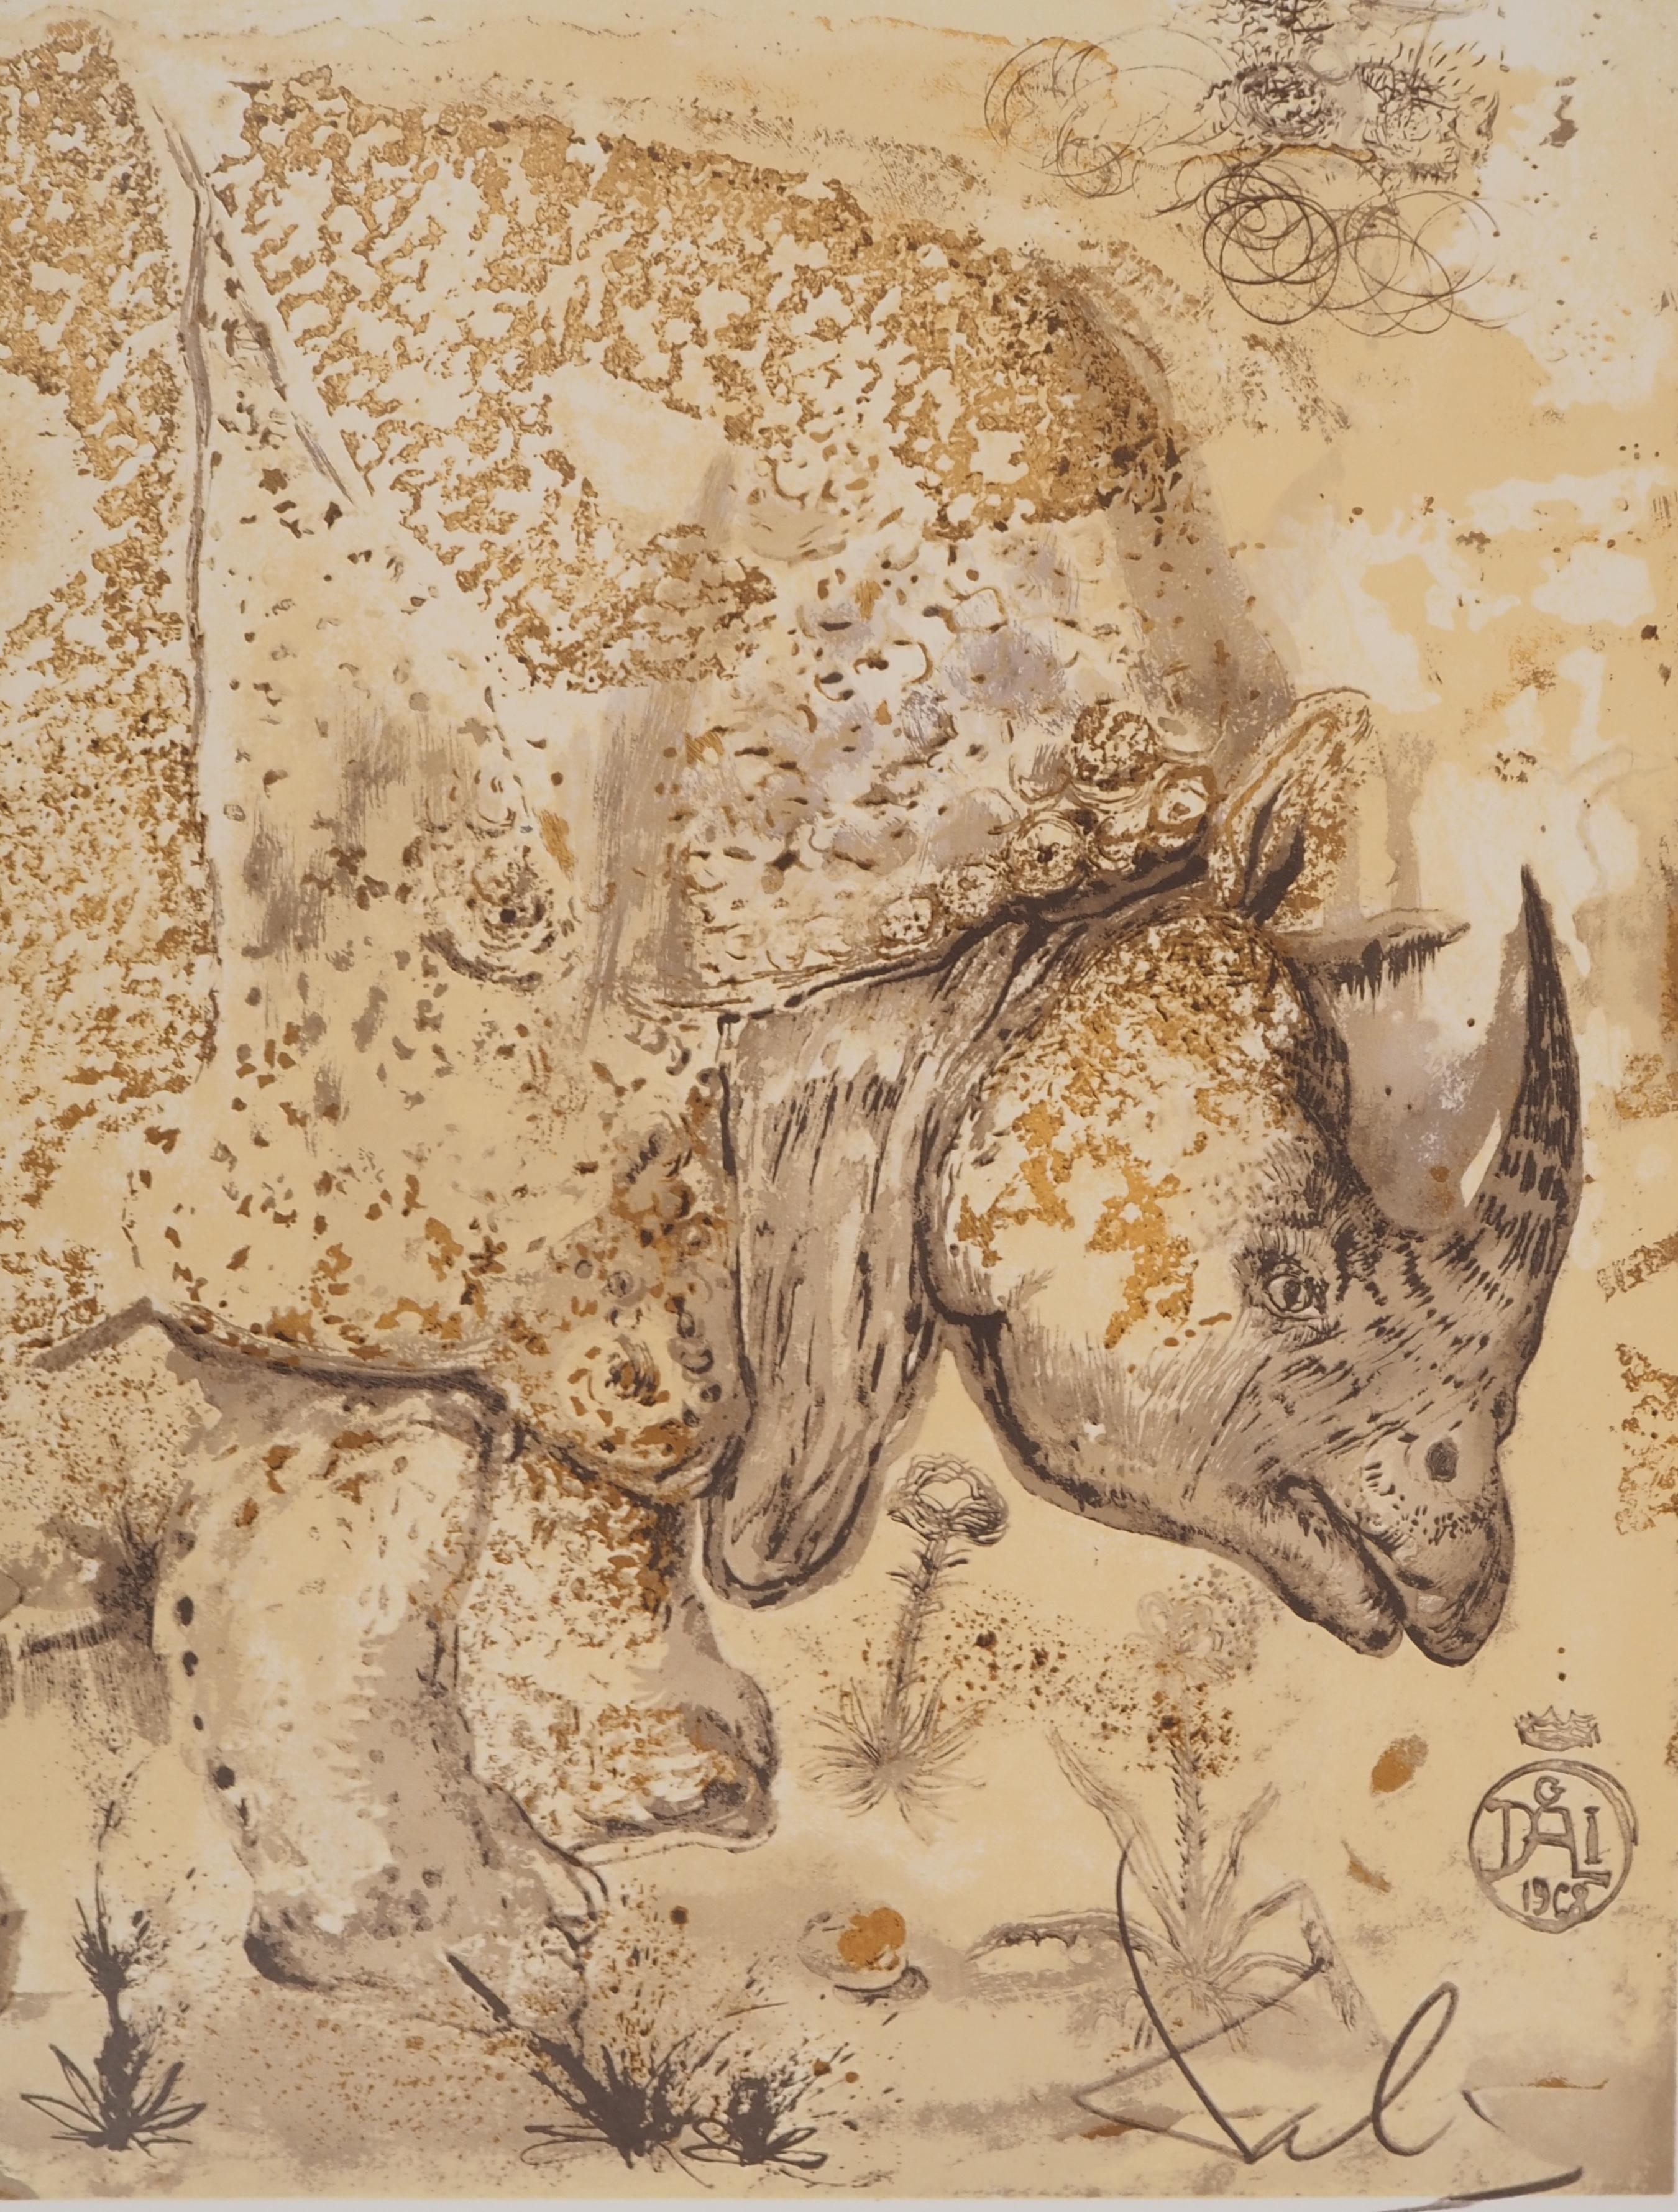 Salvador Dali (1904-1989)
Rhinoceros, Tribute to Albrecht DURER, 1971

Original lithograph
Printed signature in the plate
On paper 76 x 56.5 cm (c. 30 x 22 in)

REFERENCE : Catalog raisonné de l'œuvre graphique Sala Gaspar, Barcelone 1970,